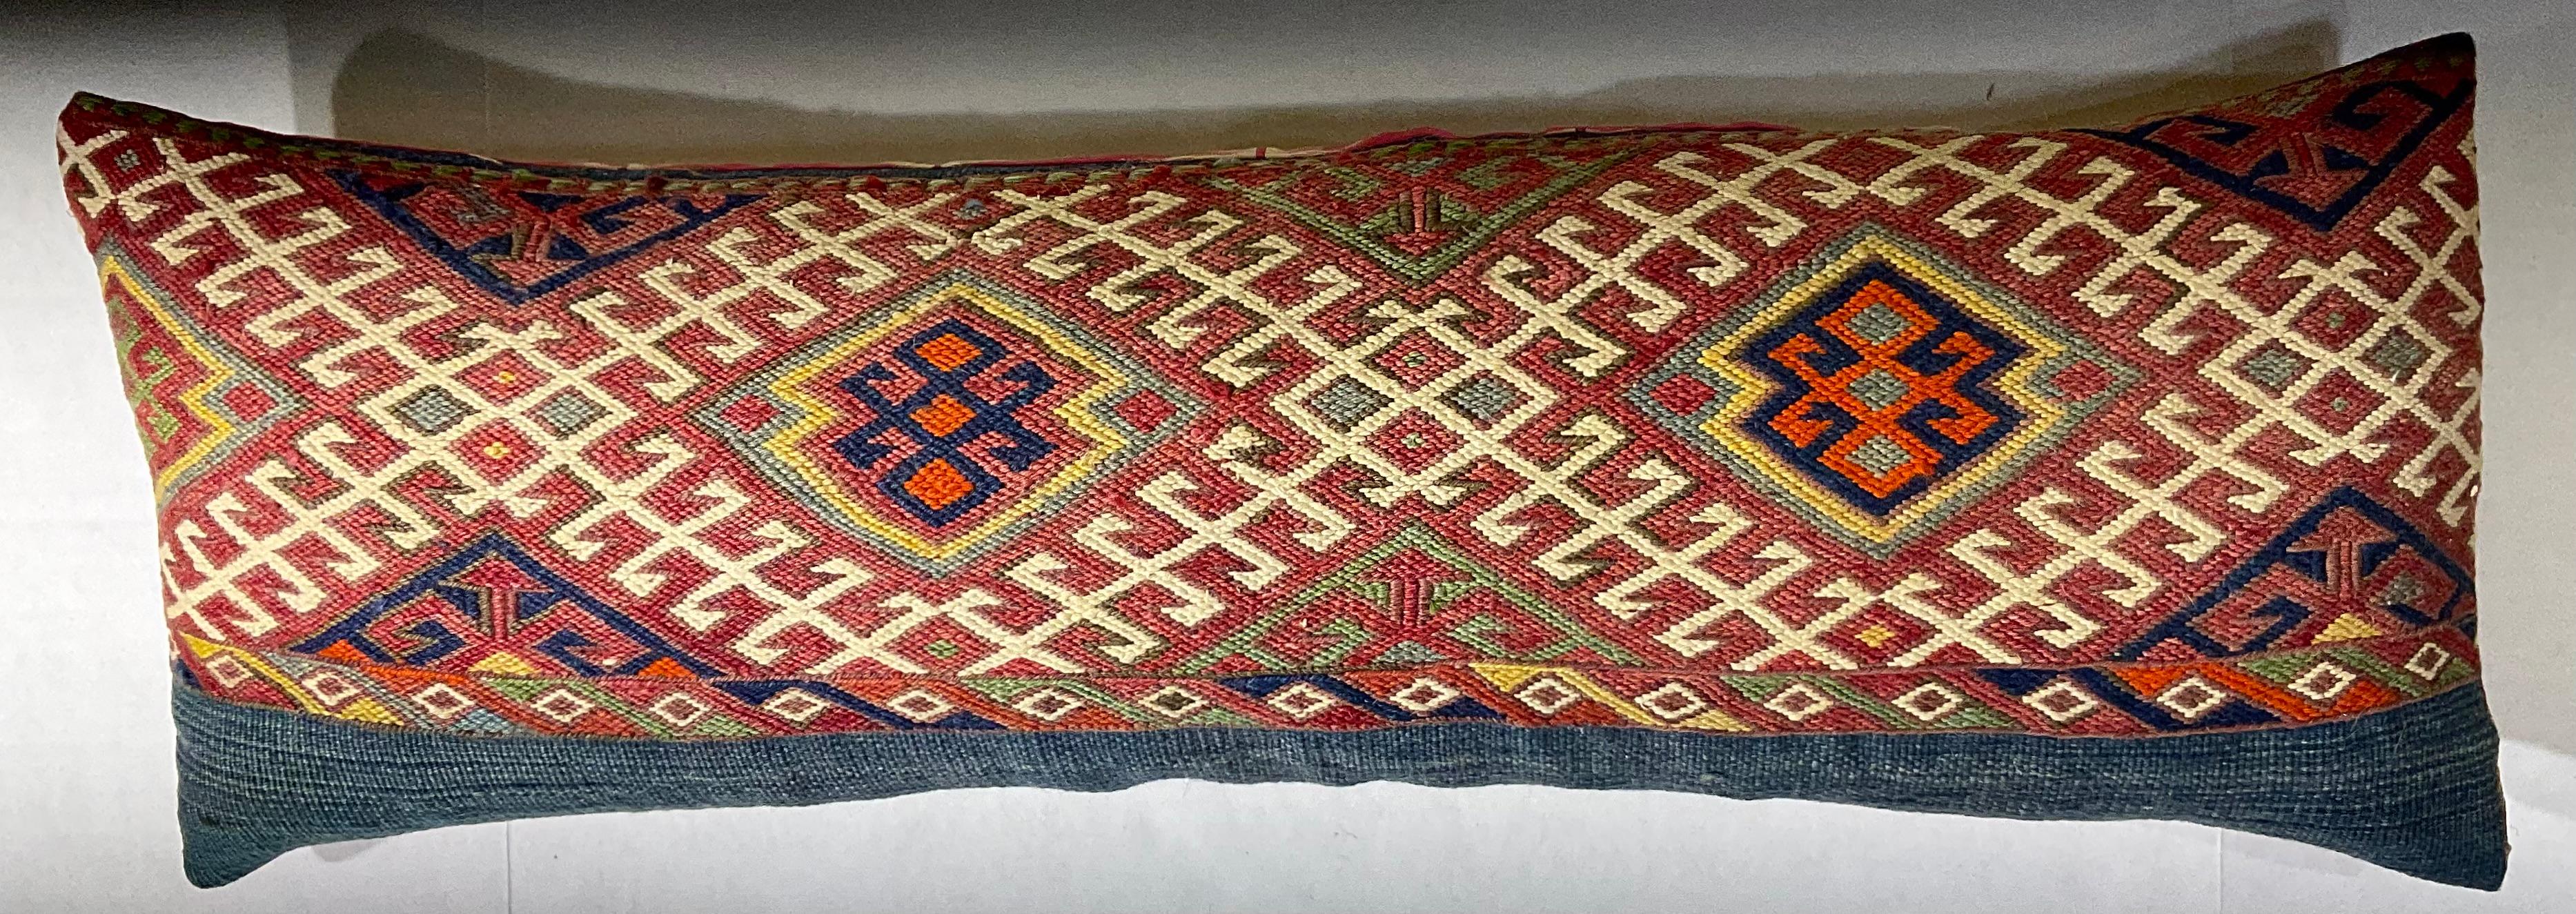 Flat-Weave Geometric Motif Kilim Rug Fragment Pillow For Sale 5